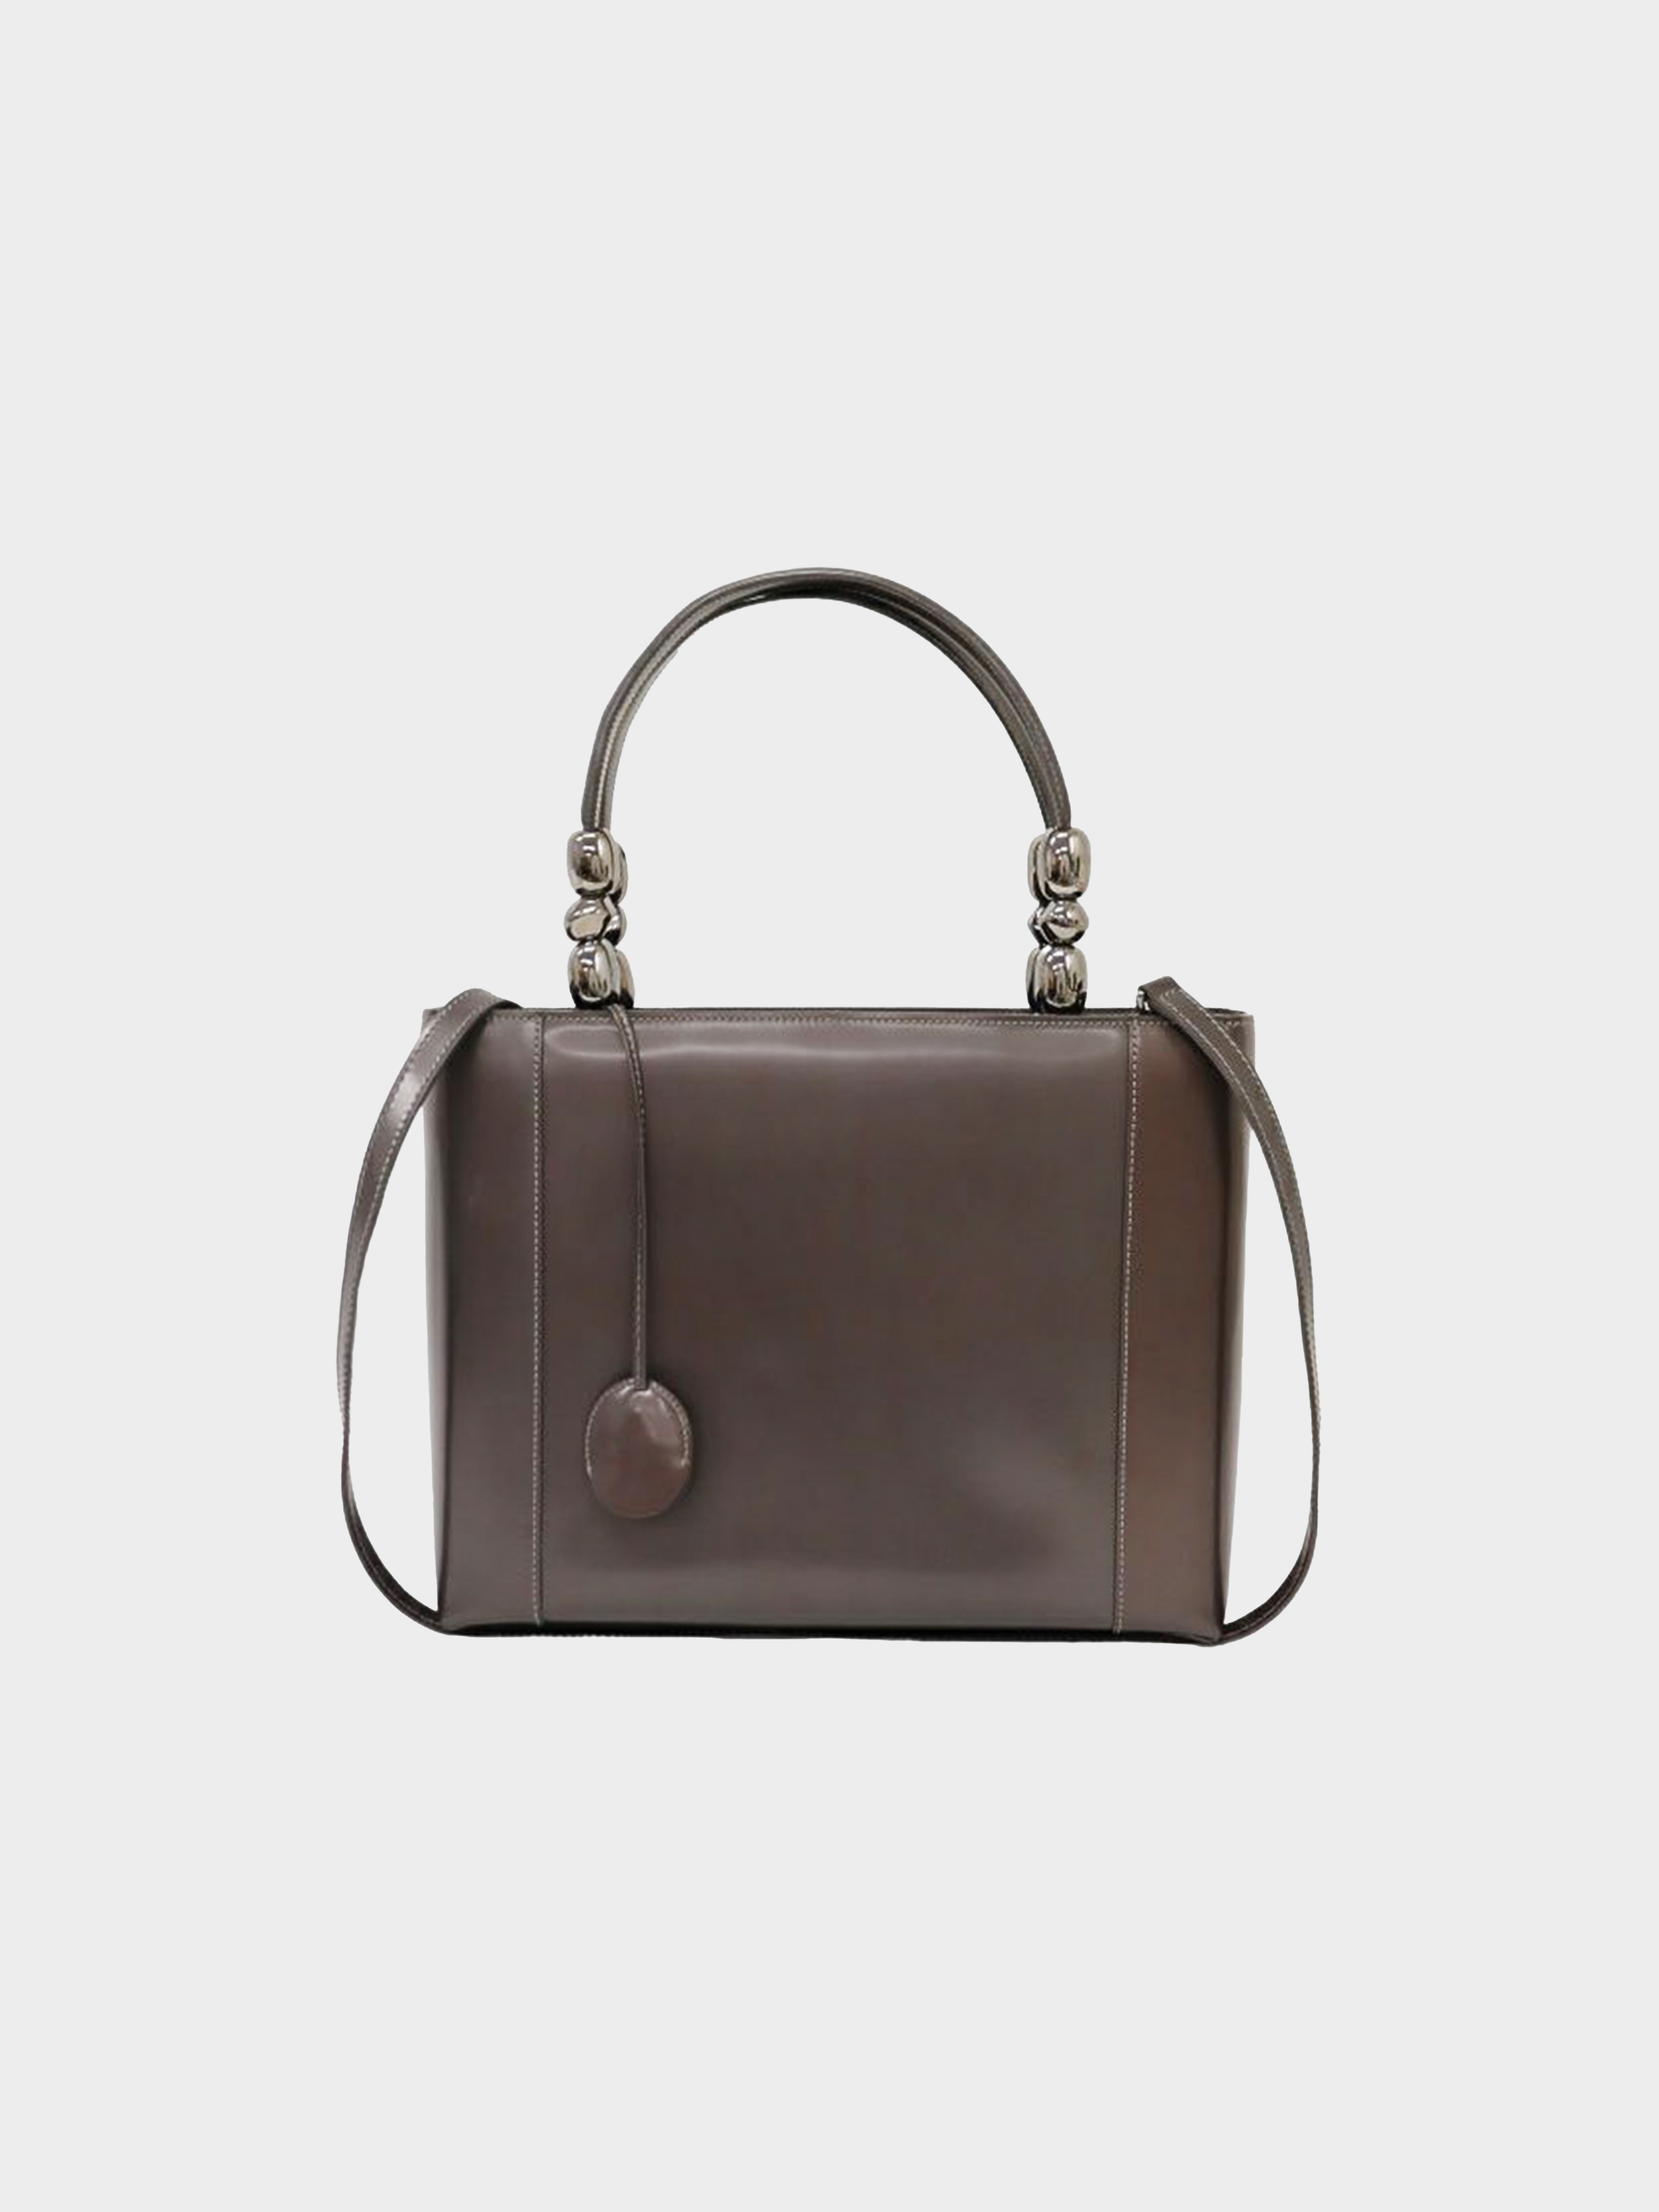 Christian Dior 2000s Two-Way Leather Hand Bag